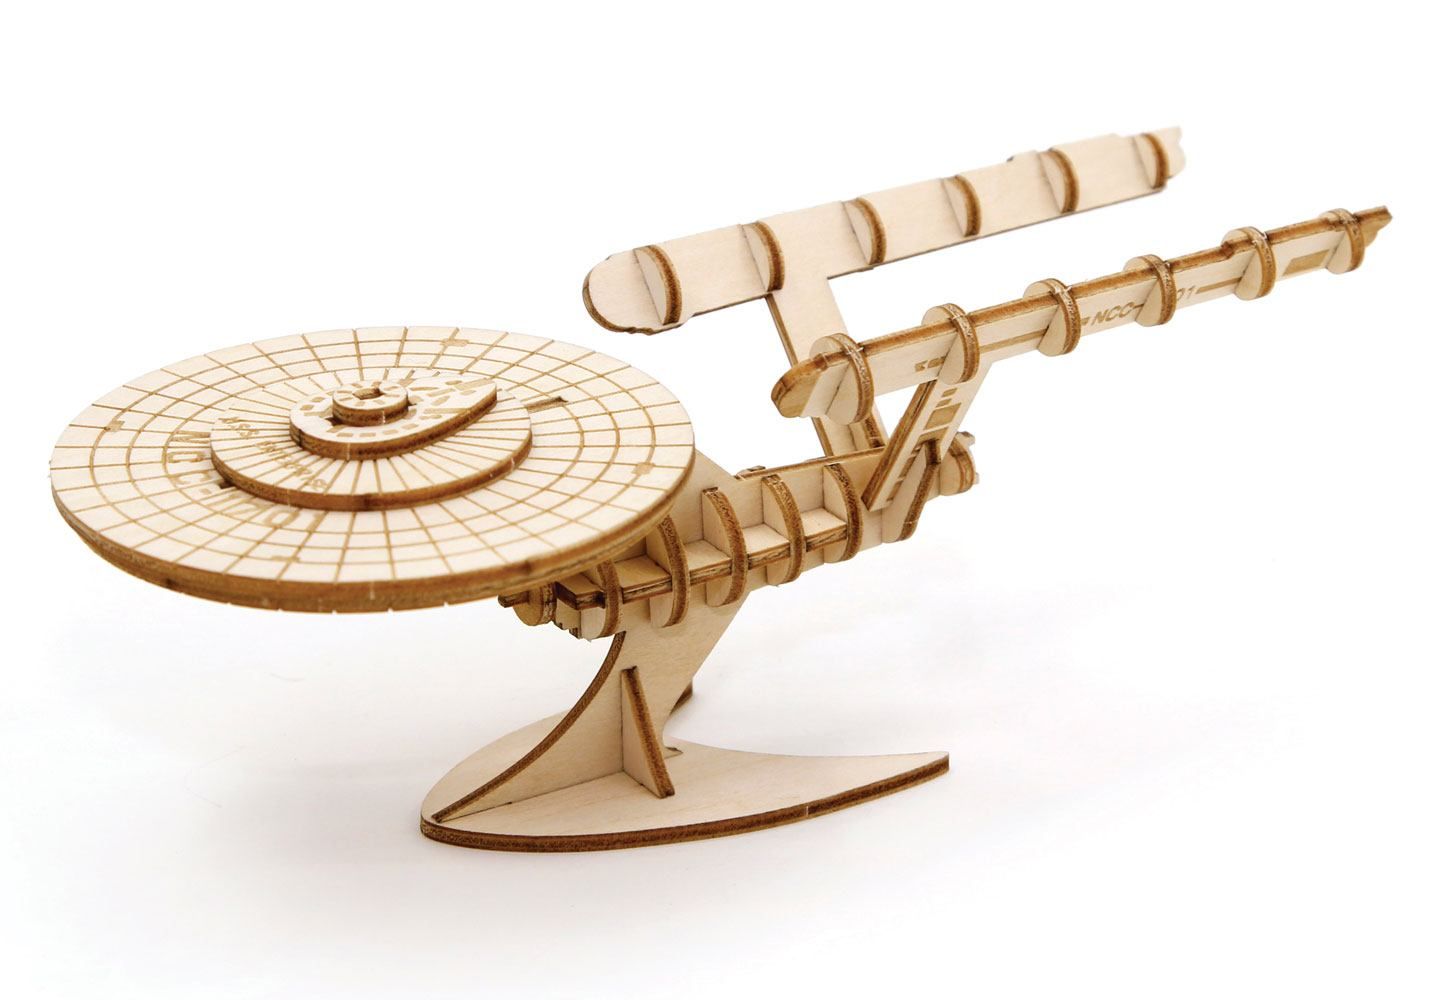 Star Trek TOS IncrediBuilds 3D Wood Model Kit U.S.S. Enterprise Insight Editions